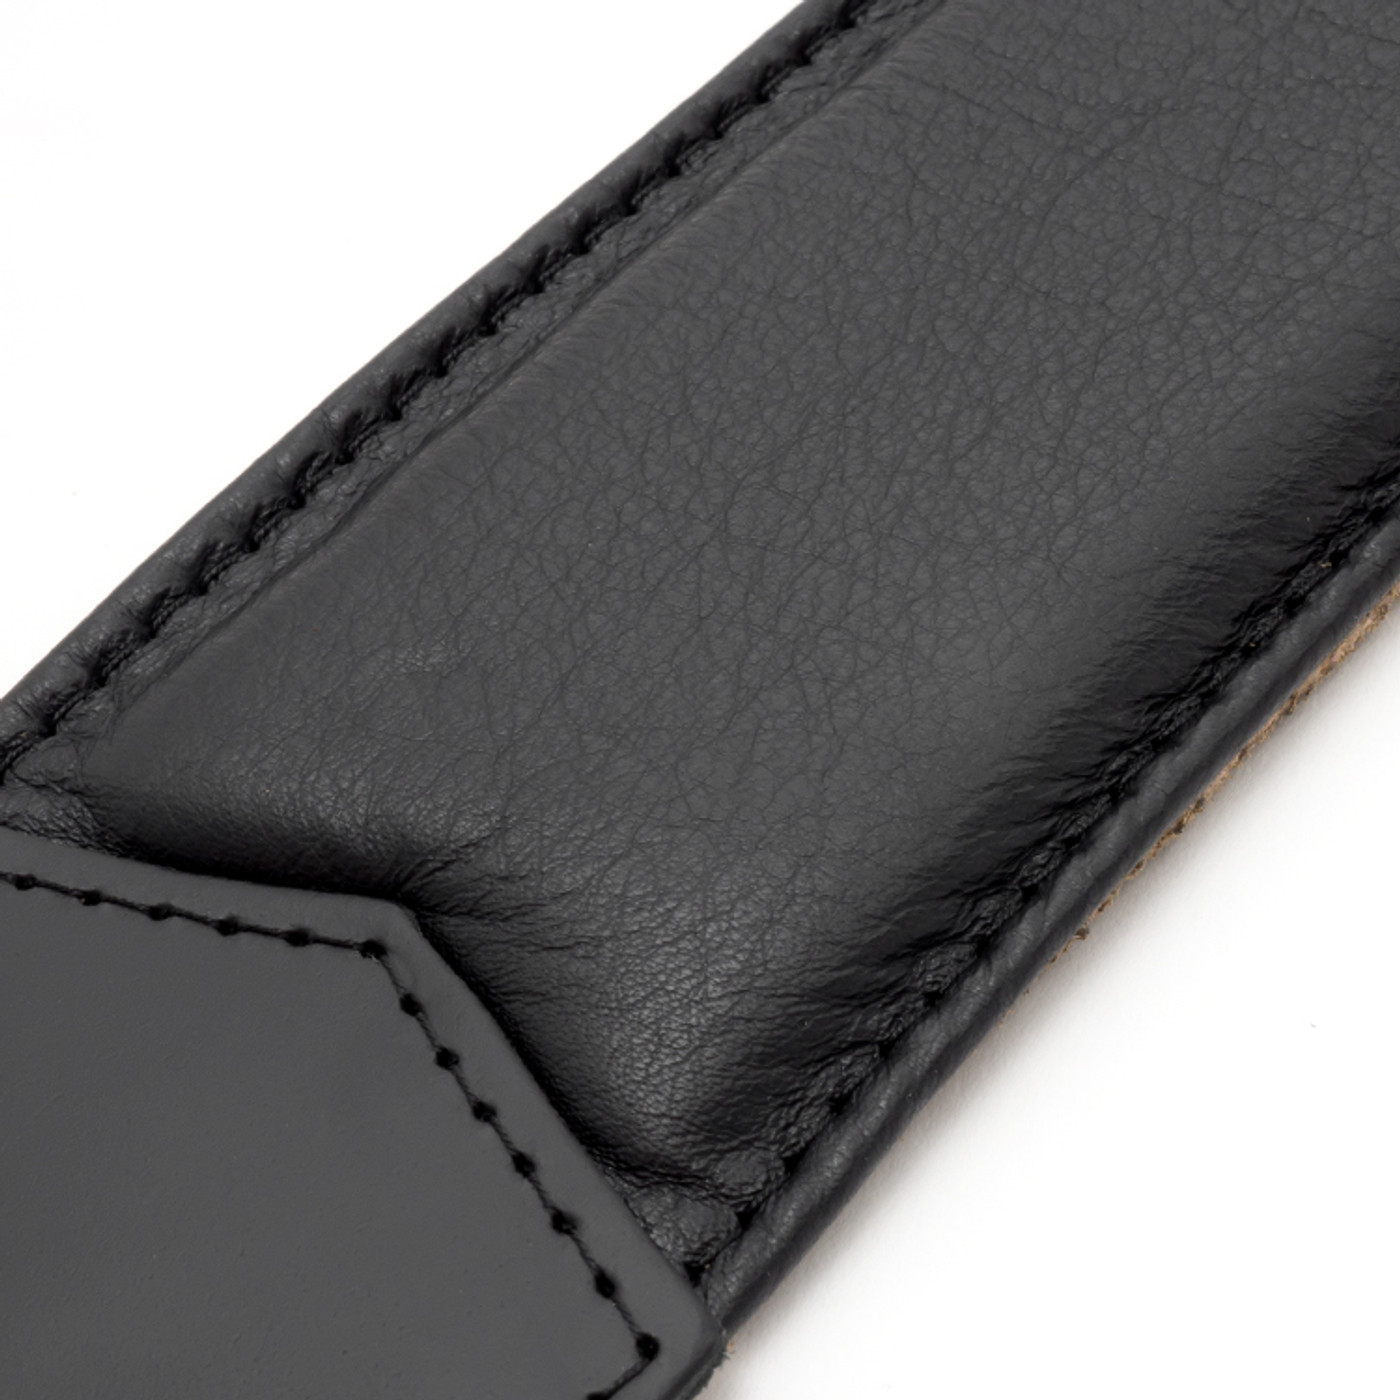  Duesenberg Deluxe Padded Leather Strap